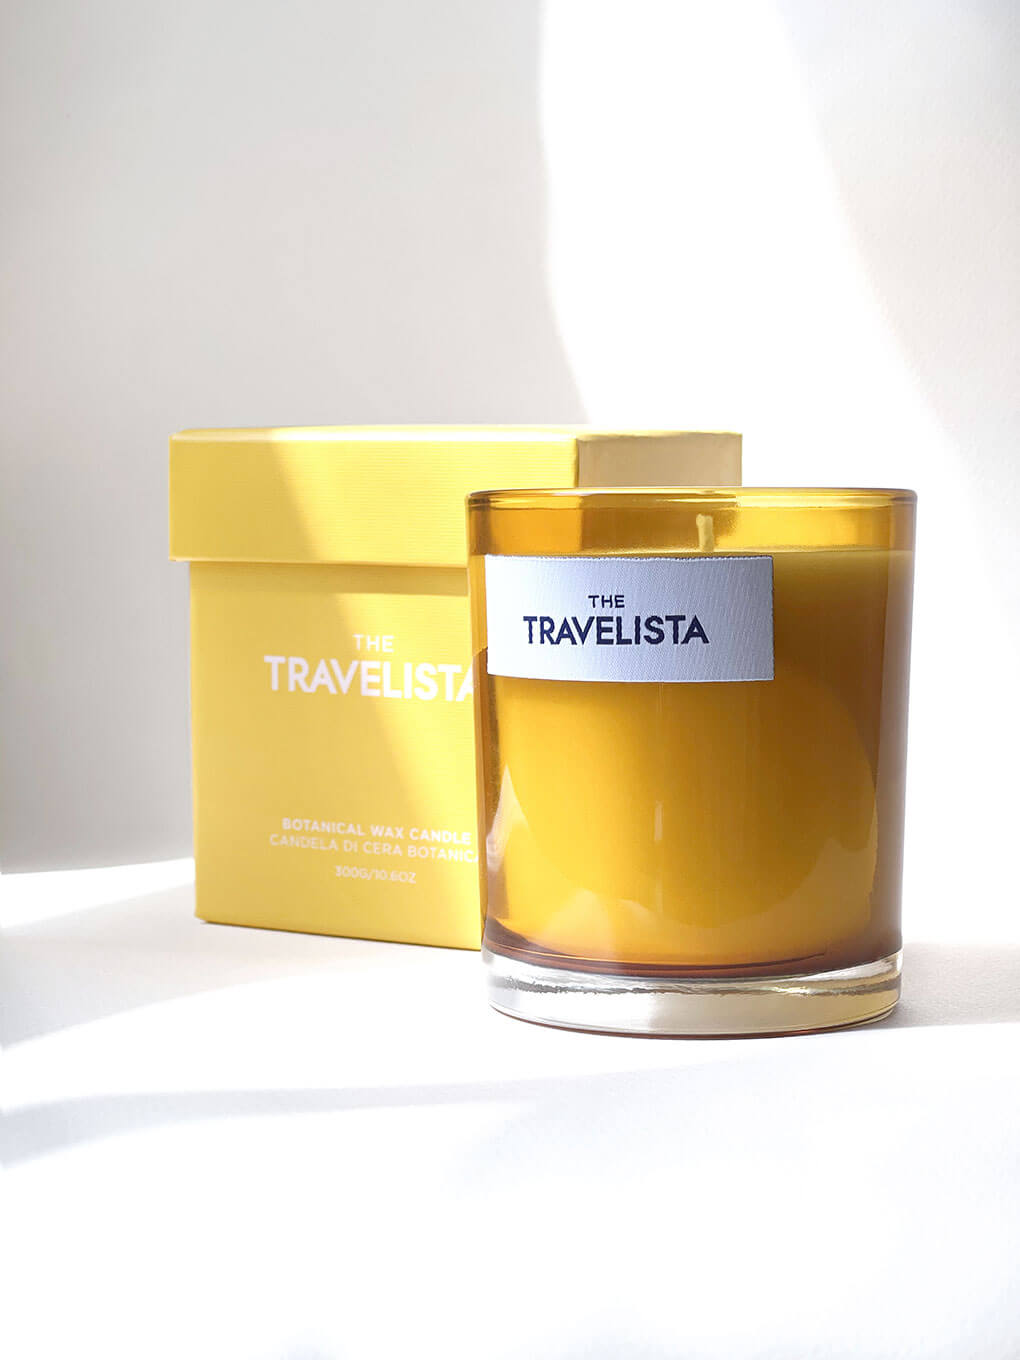 The Travelista pure botanical candle range